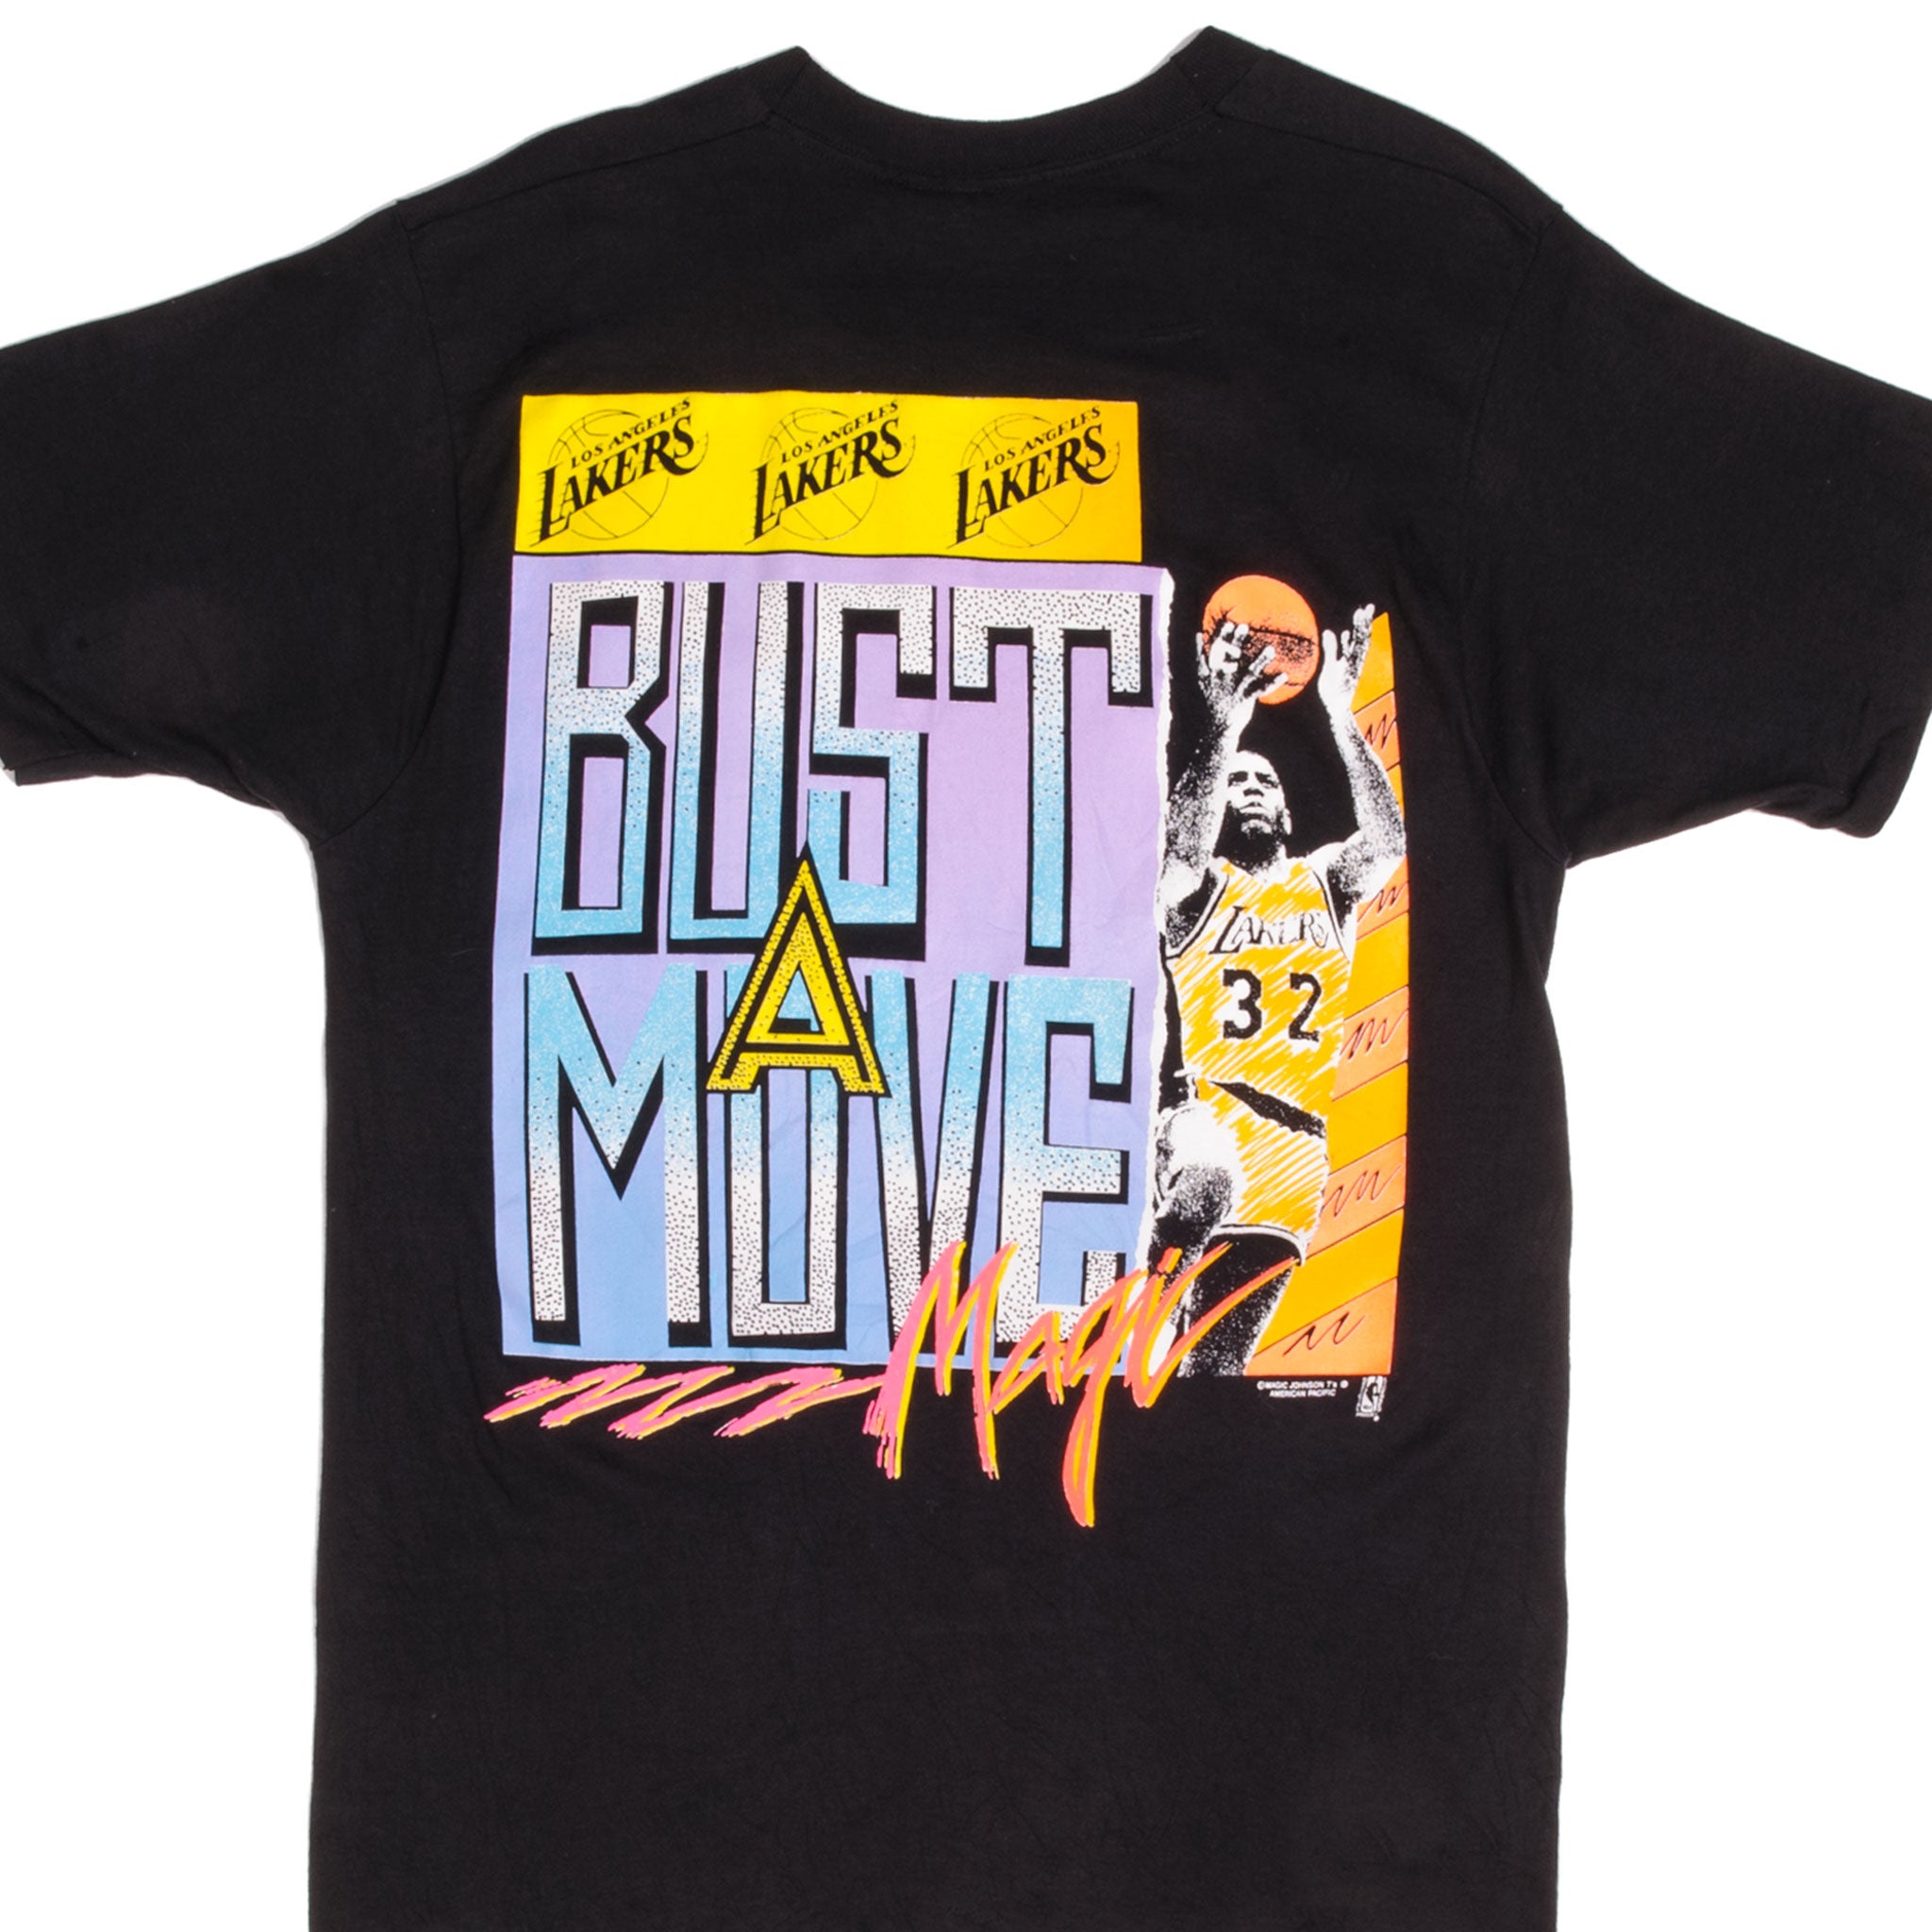 Vintage 90s Los Angeles Lakers NBA T Shirt M